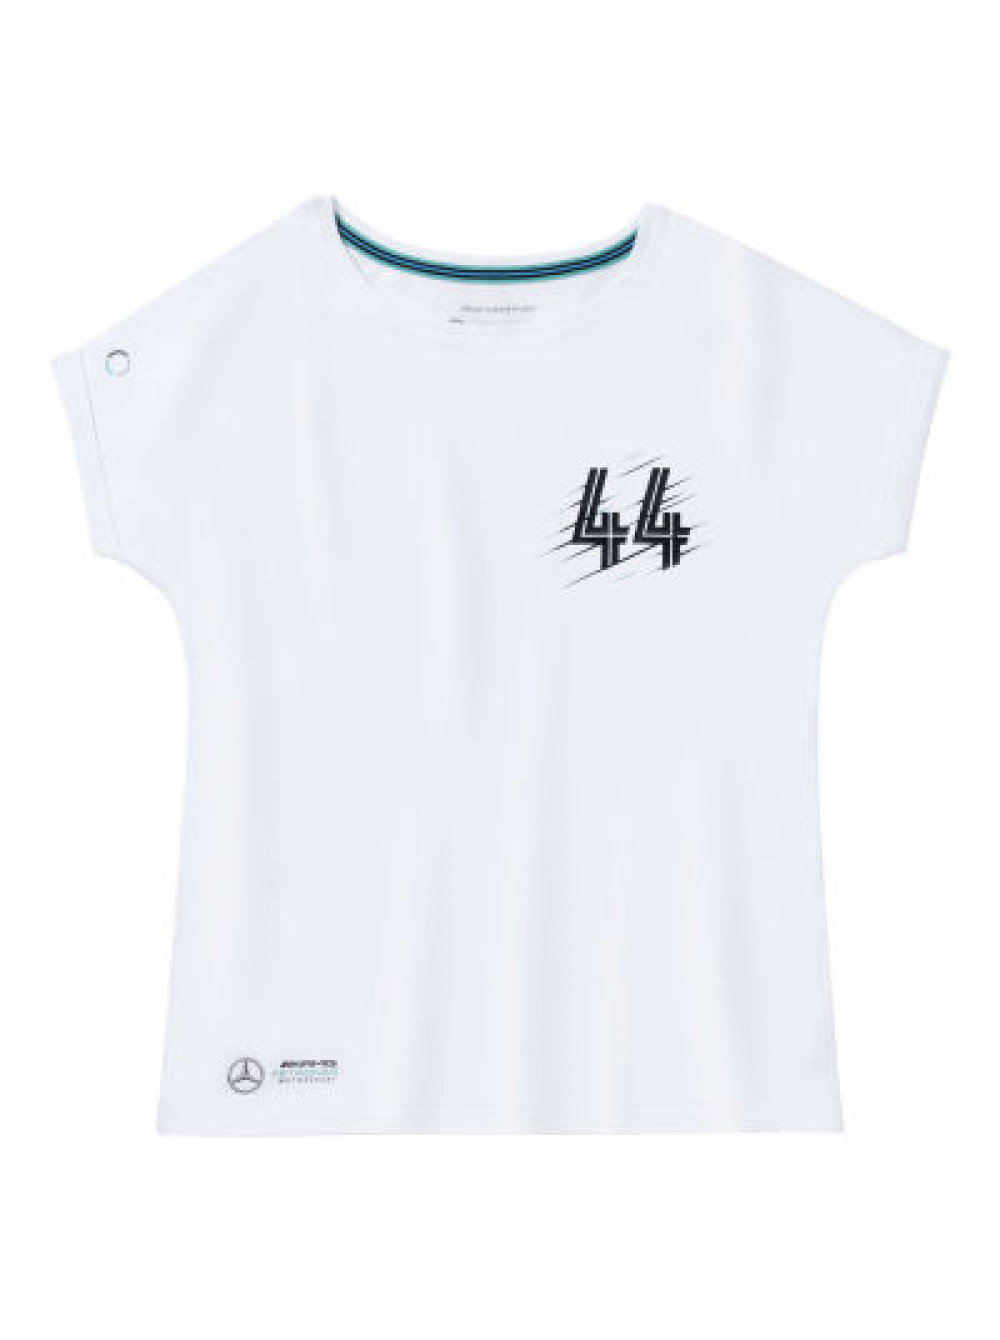 Женская футболка Mercedes AMG Petronas Women's T-shirt, Lewis Hamilton, White M